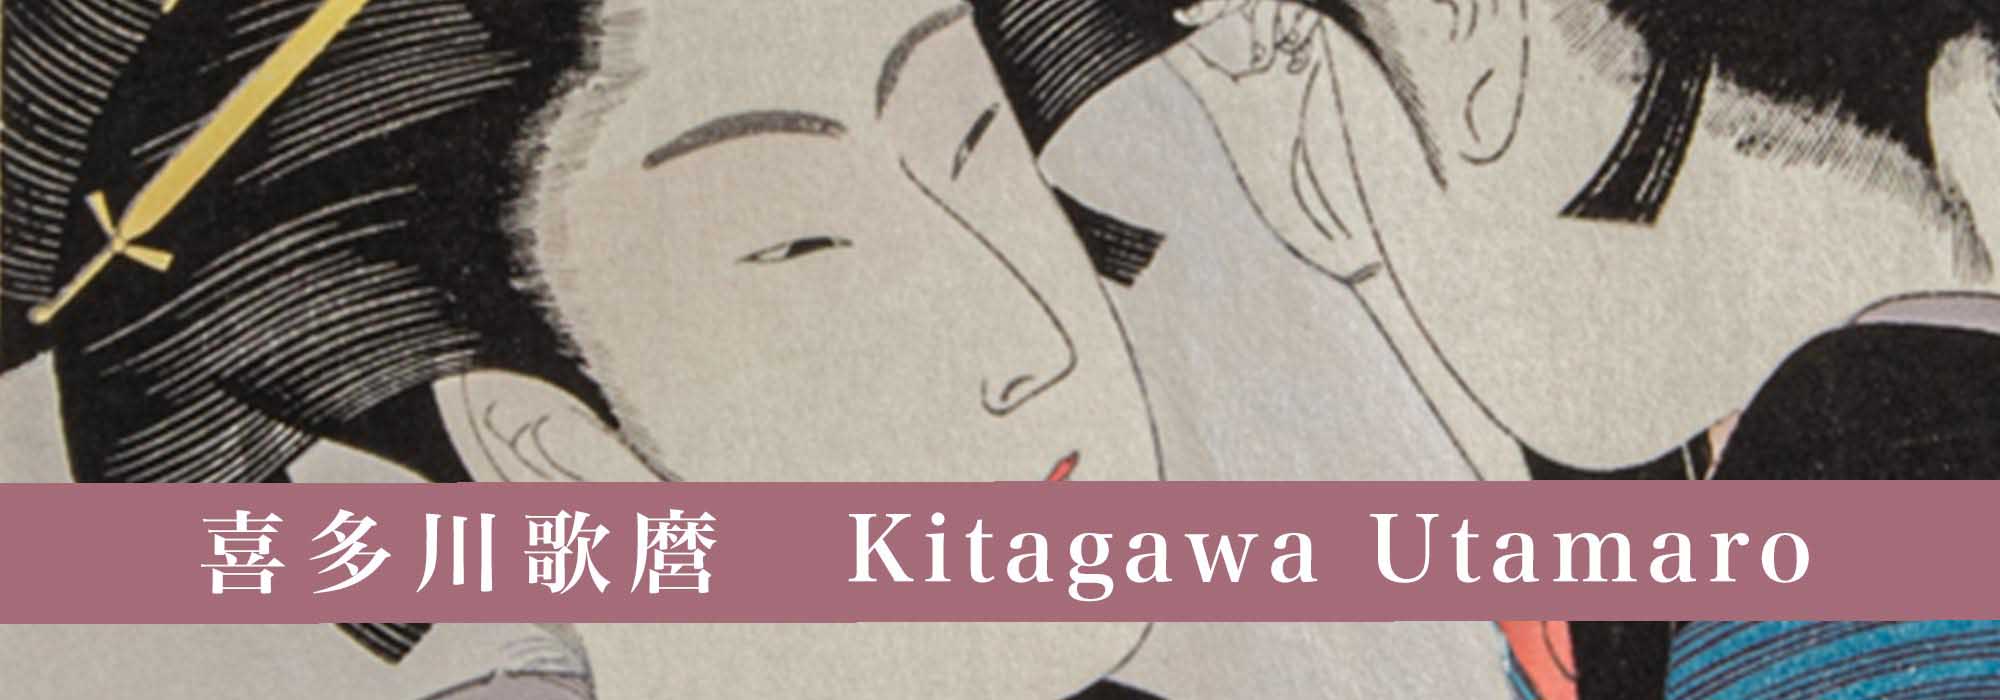 Kitagawa Utamaro Reproduction